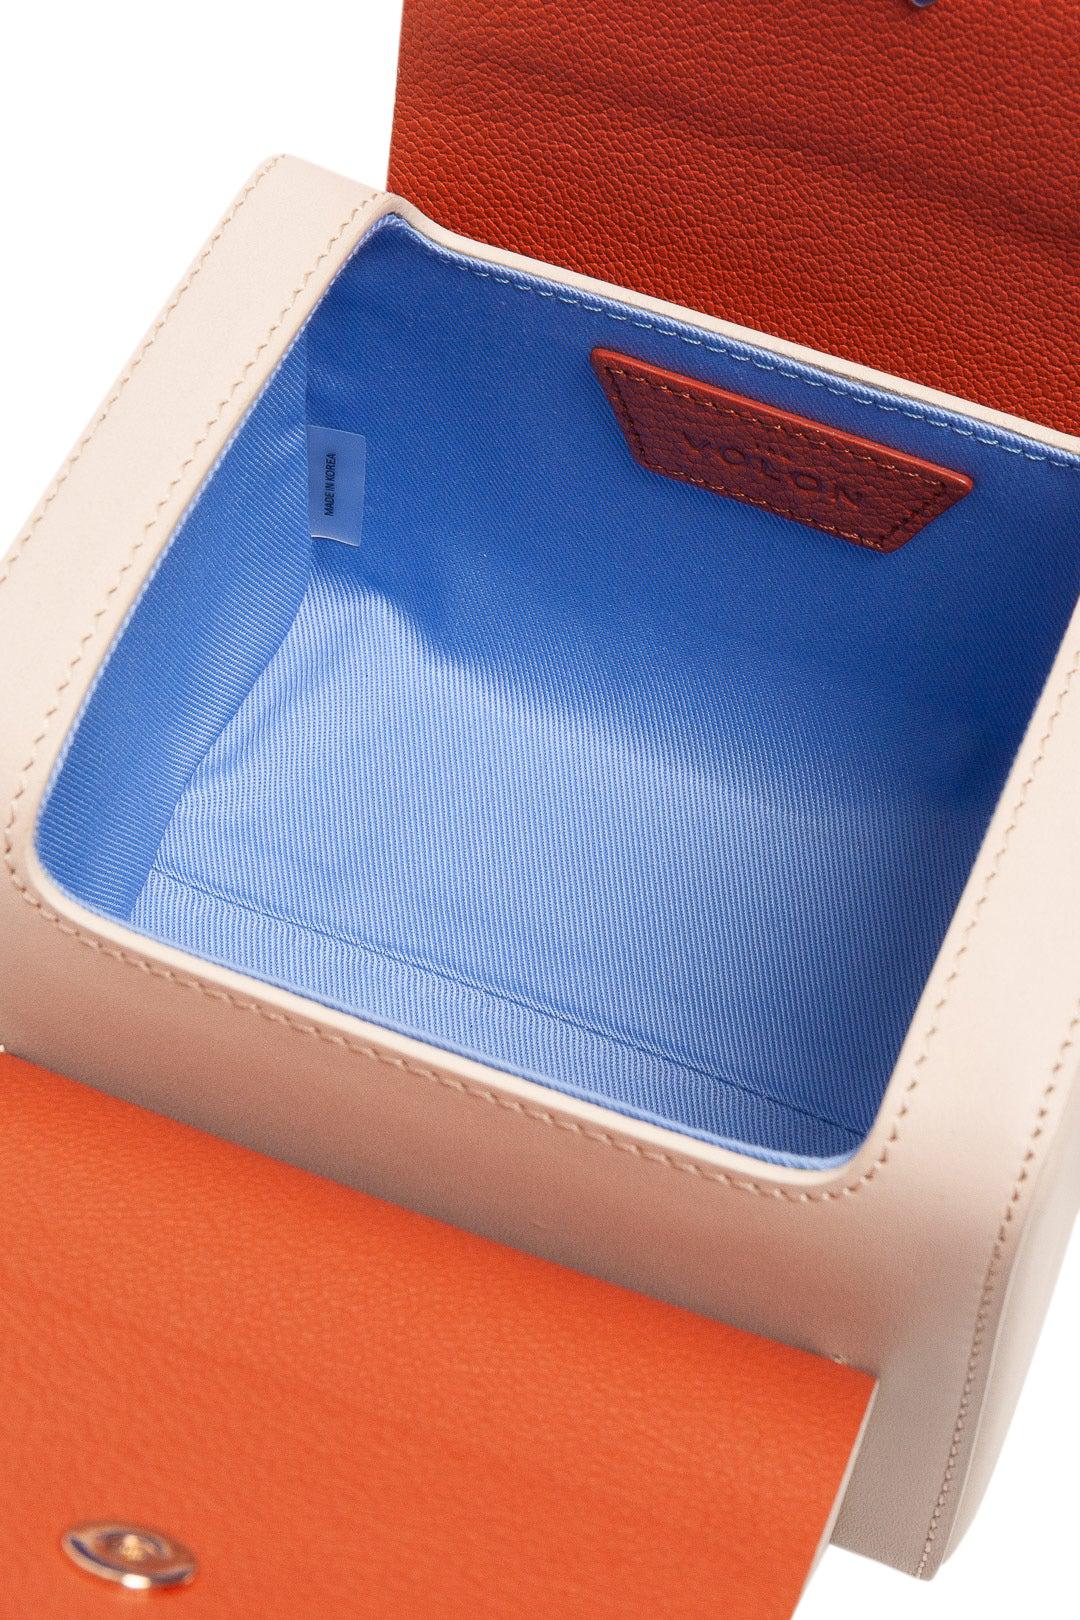 THE VOLON-Po Cube leather square shoulder bag-B20-730-103-dgallerystore